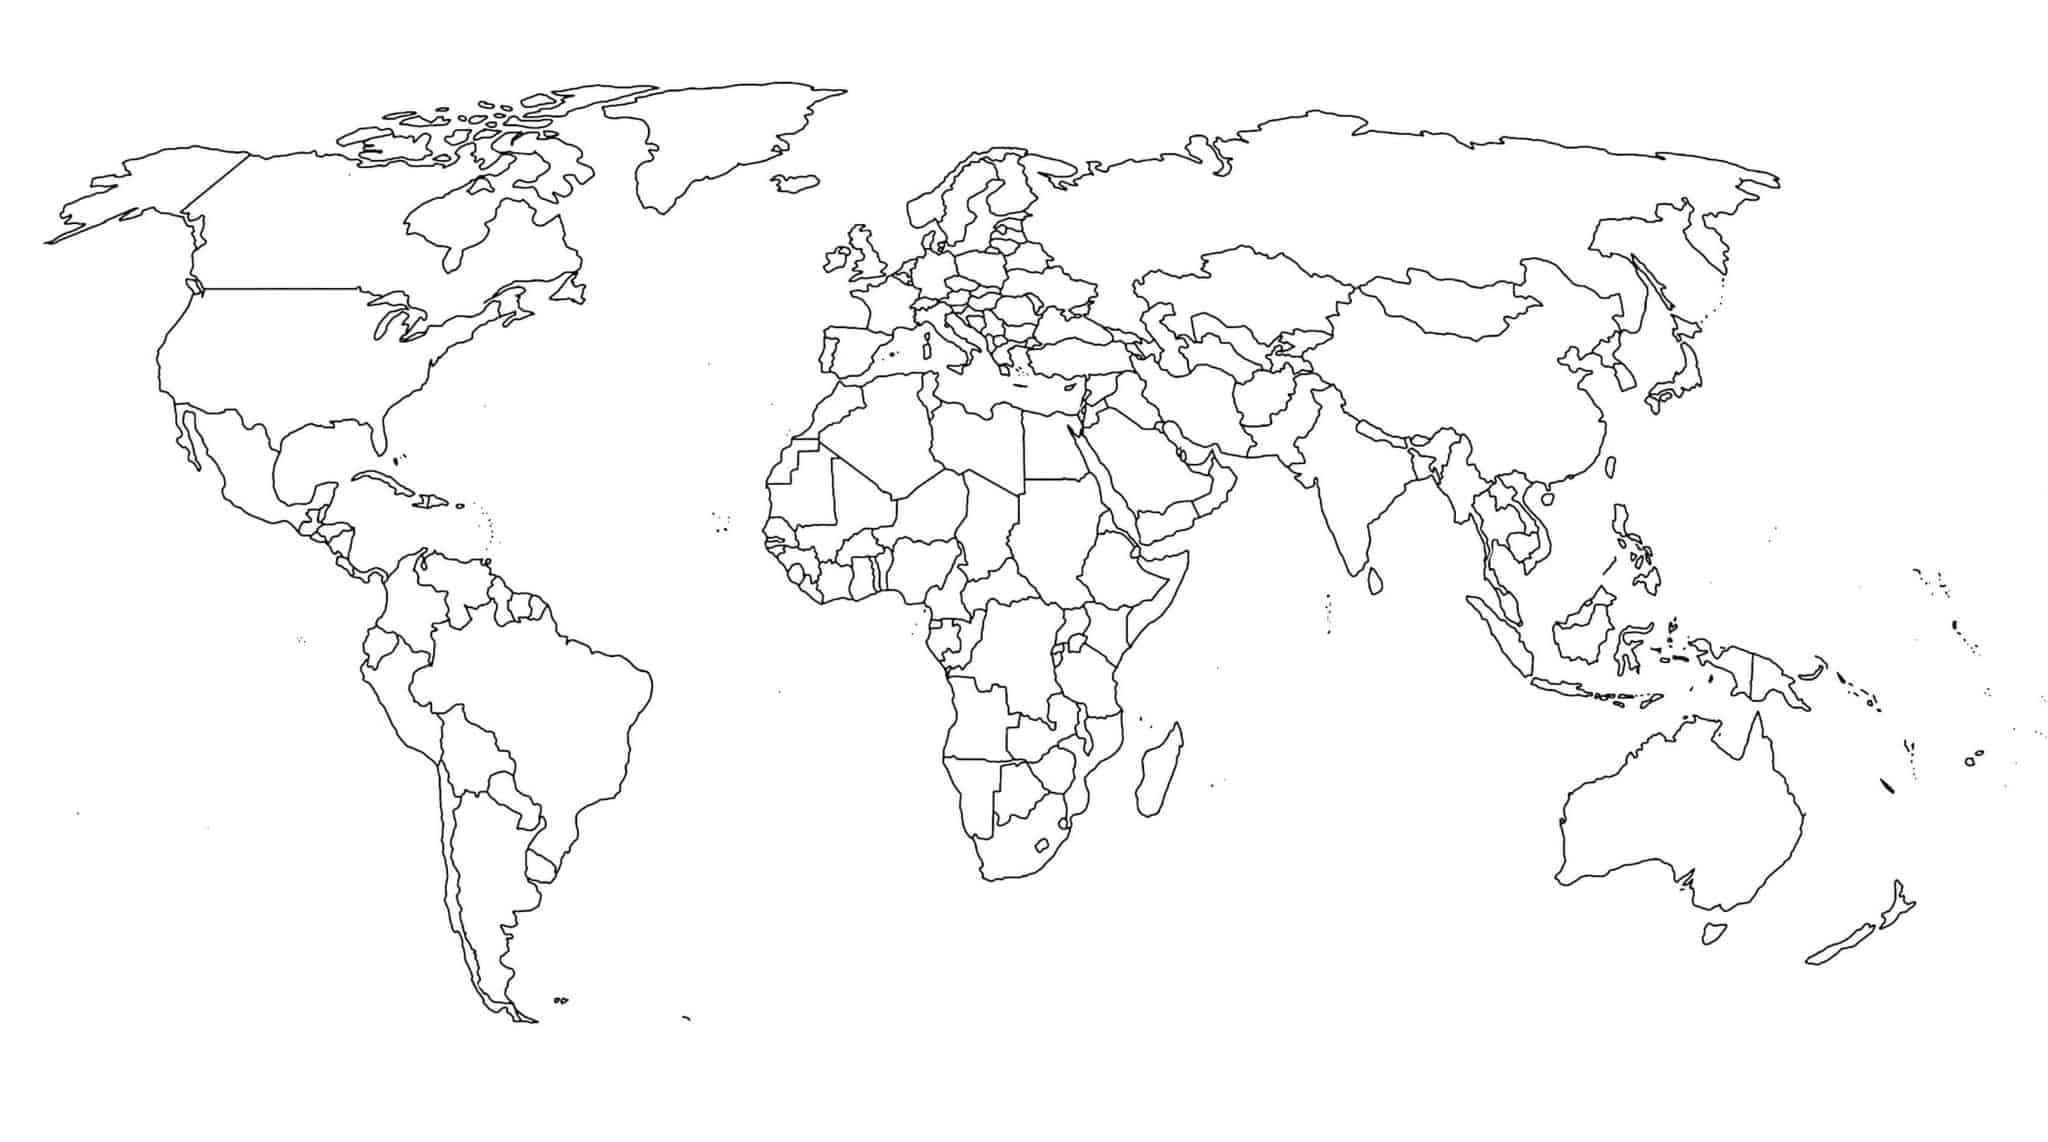 Mapa Mundi para colorir